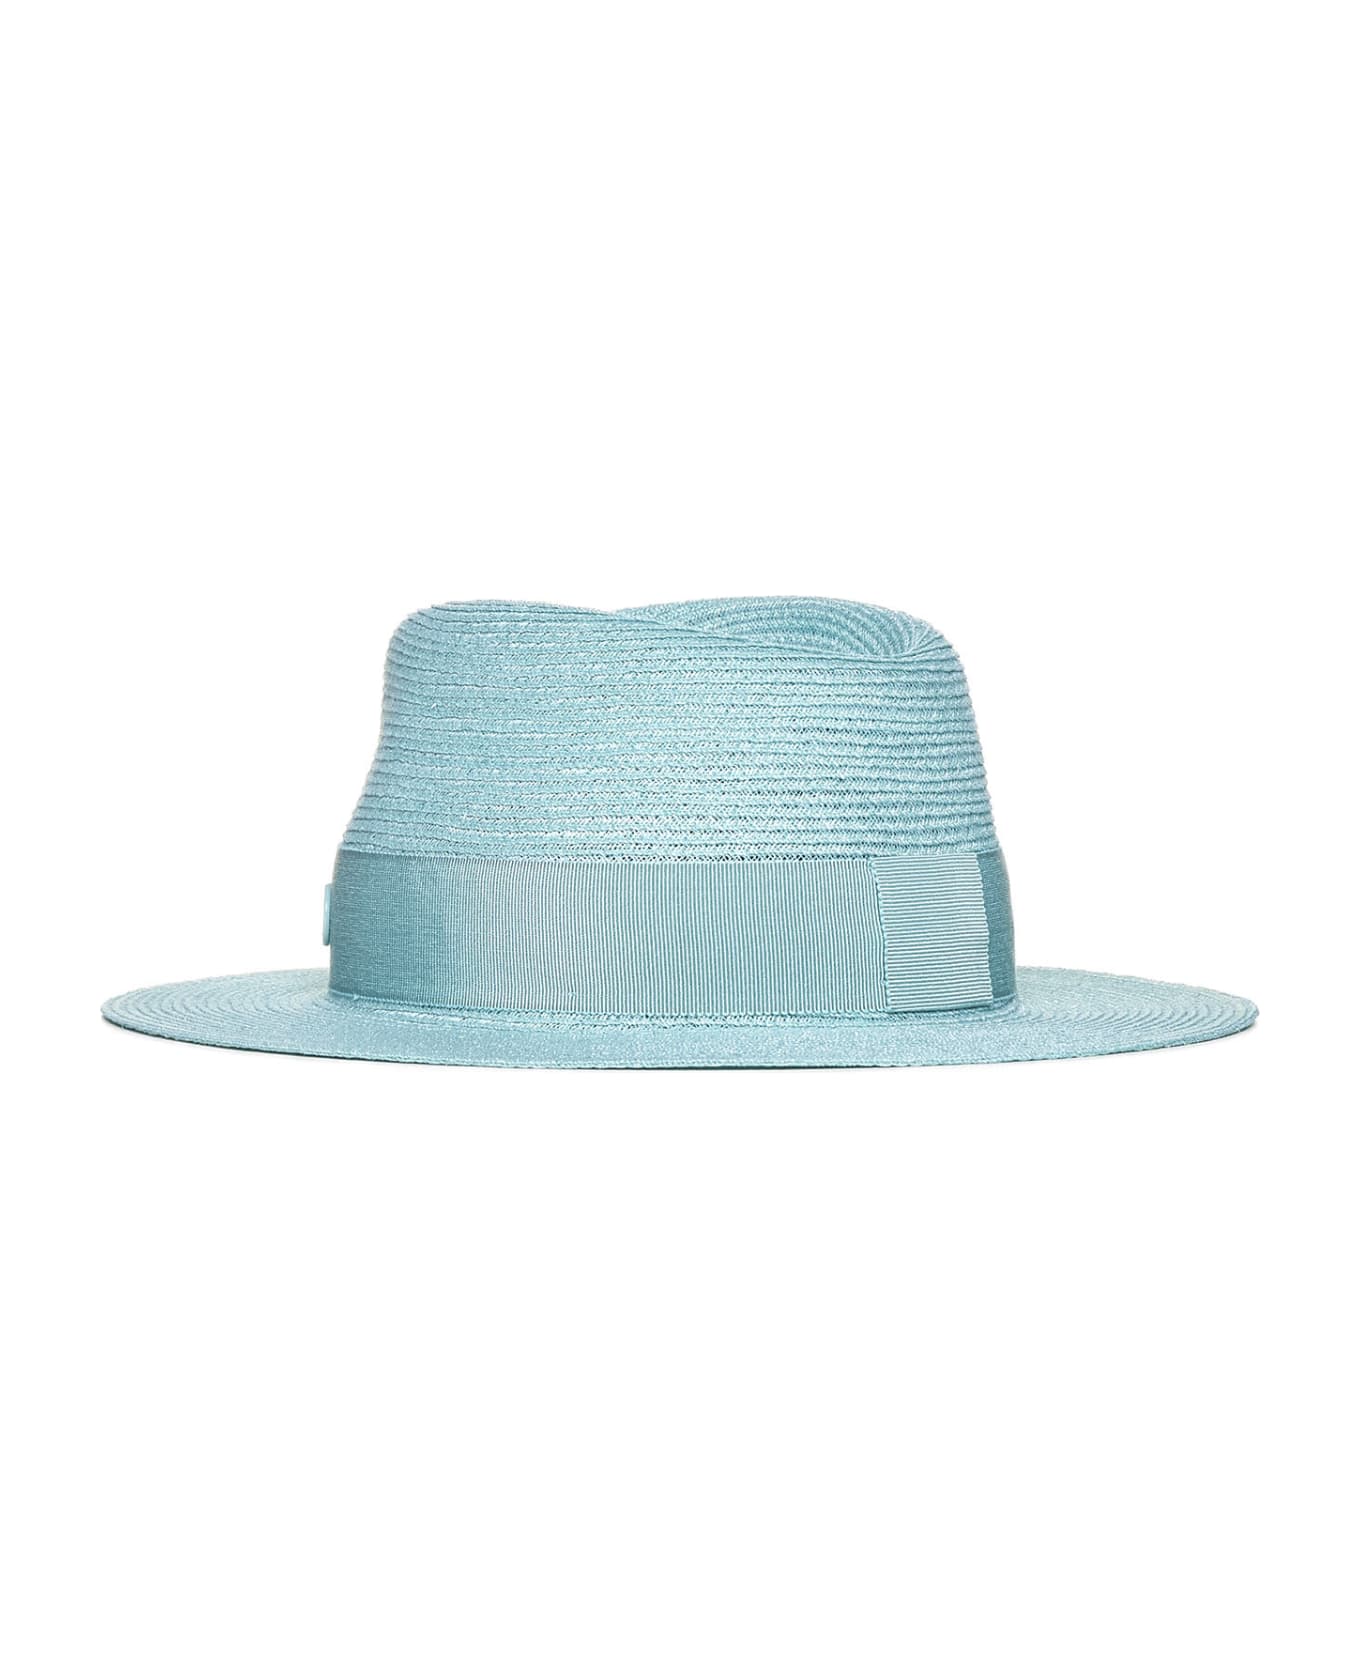 Maison Michel Hat - Aqua blue